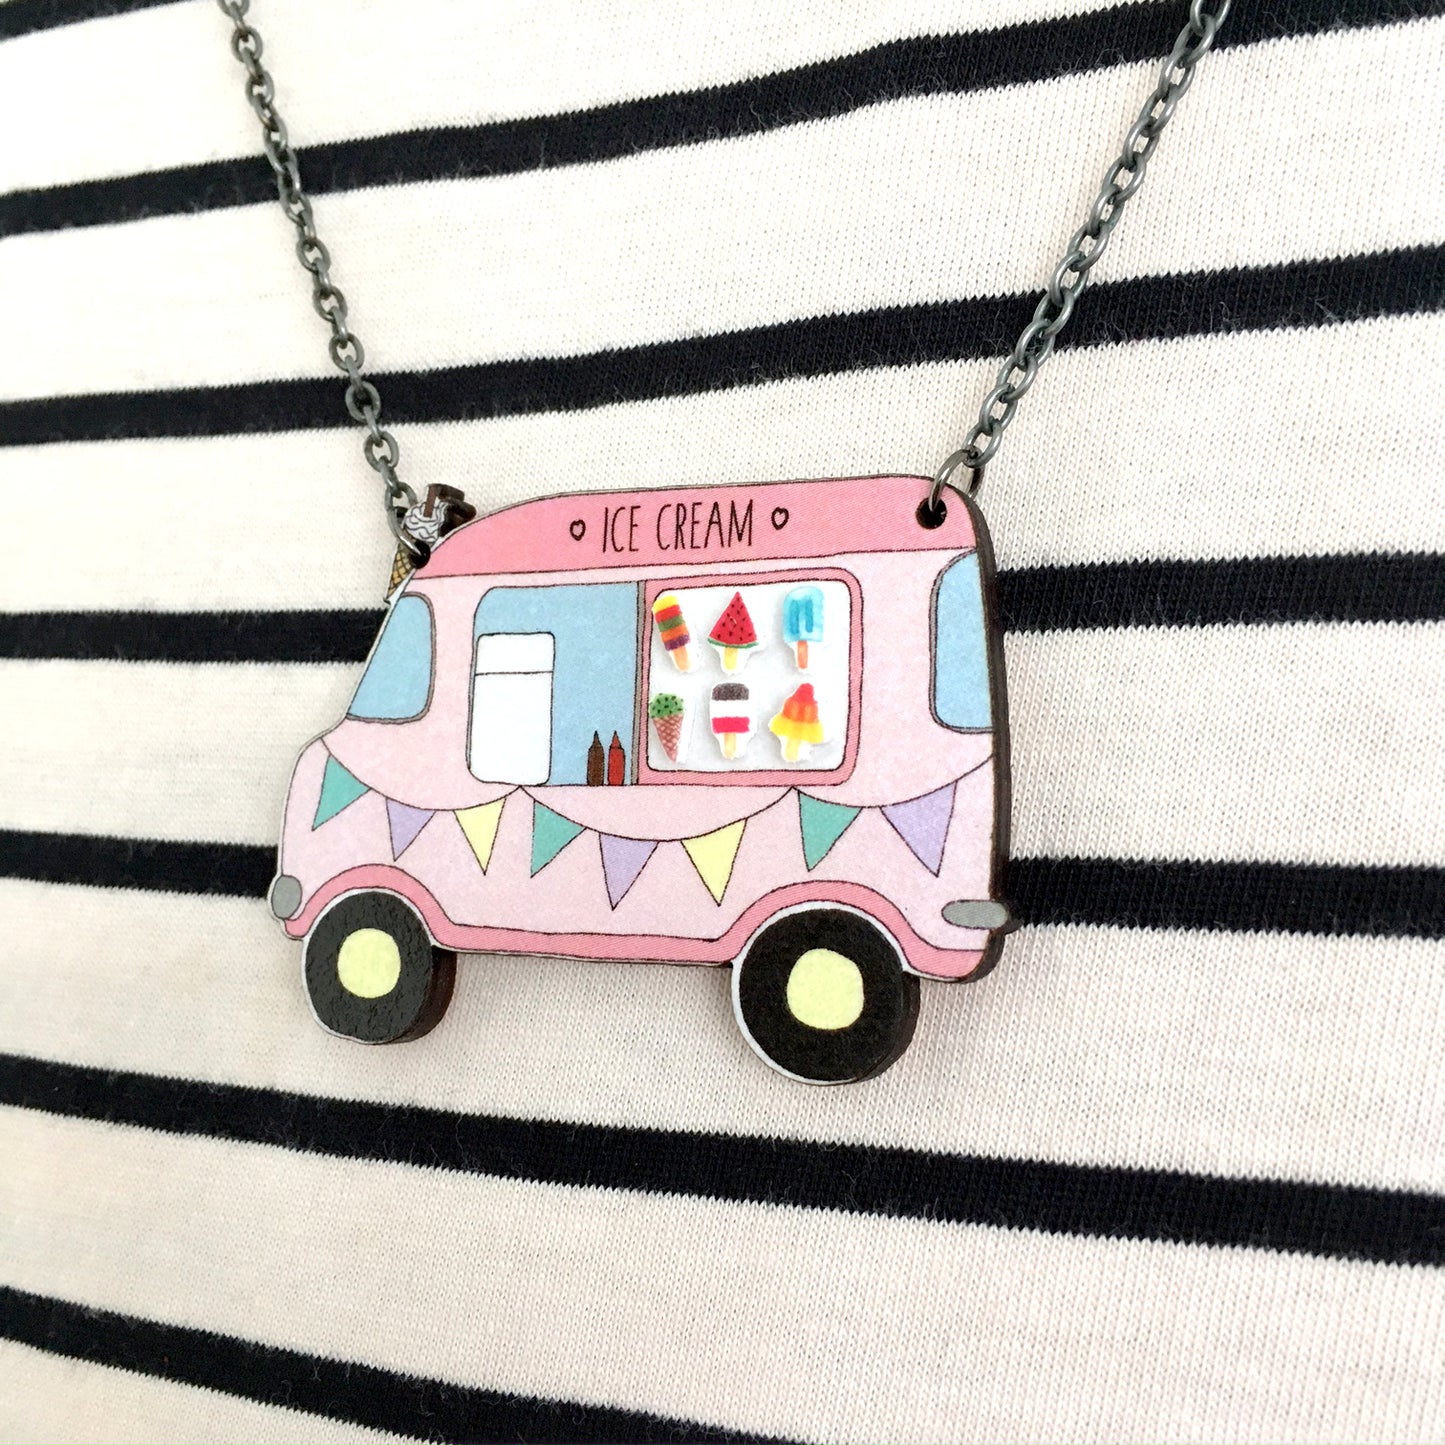 Ice cream van necklace - Quirky statement necklace